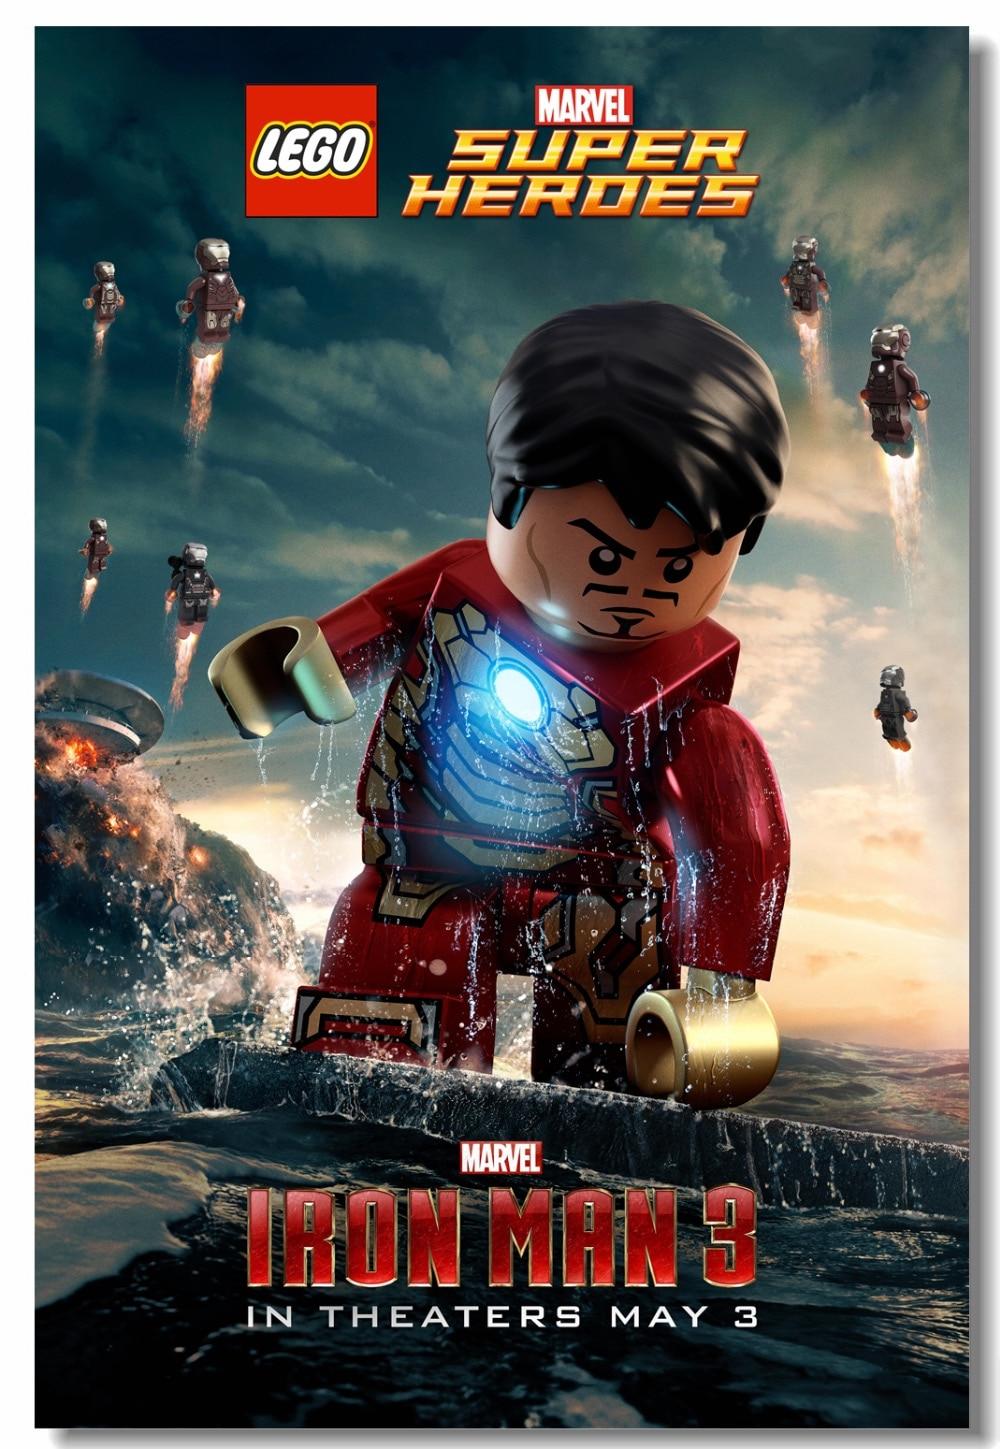 Custom Canvas Wall Decor Lego Marvel Super Heroes Poster Iron Man